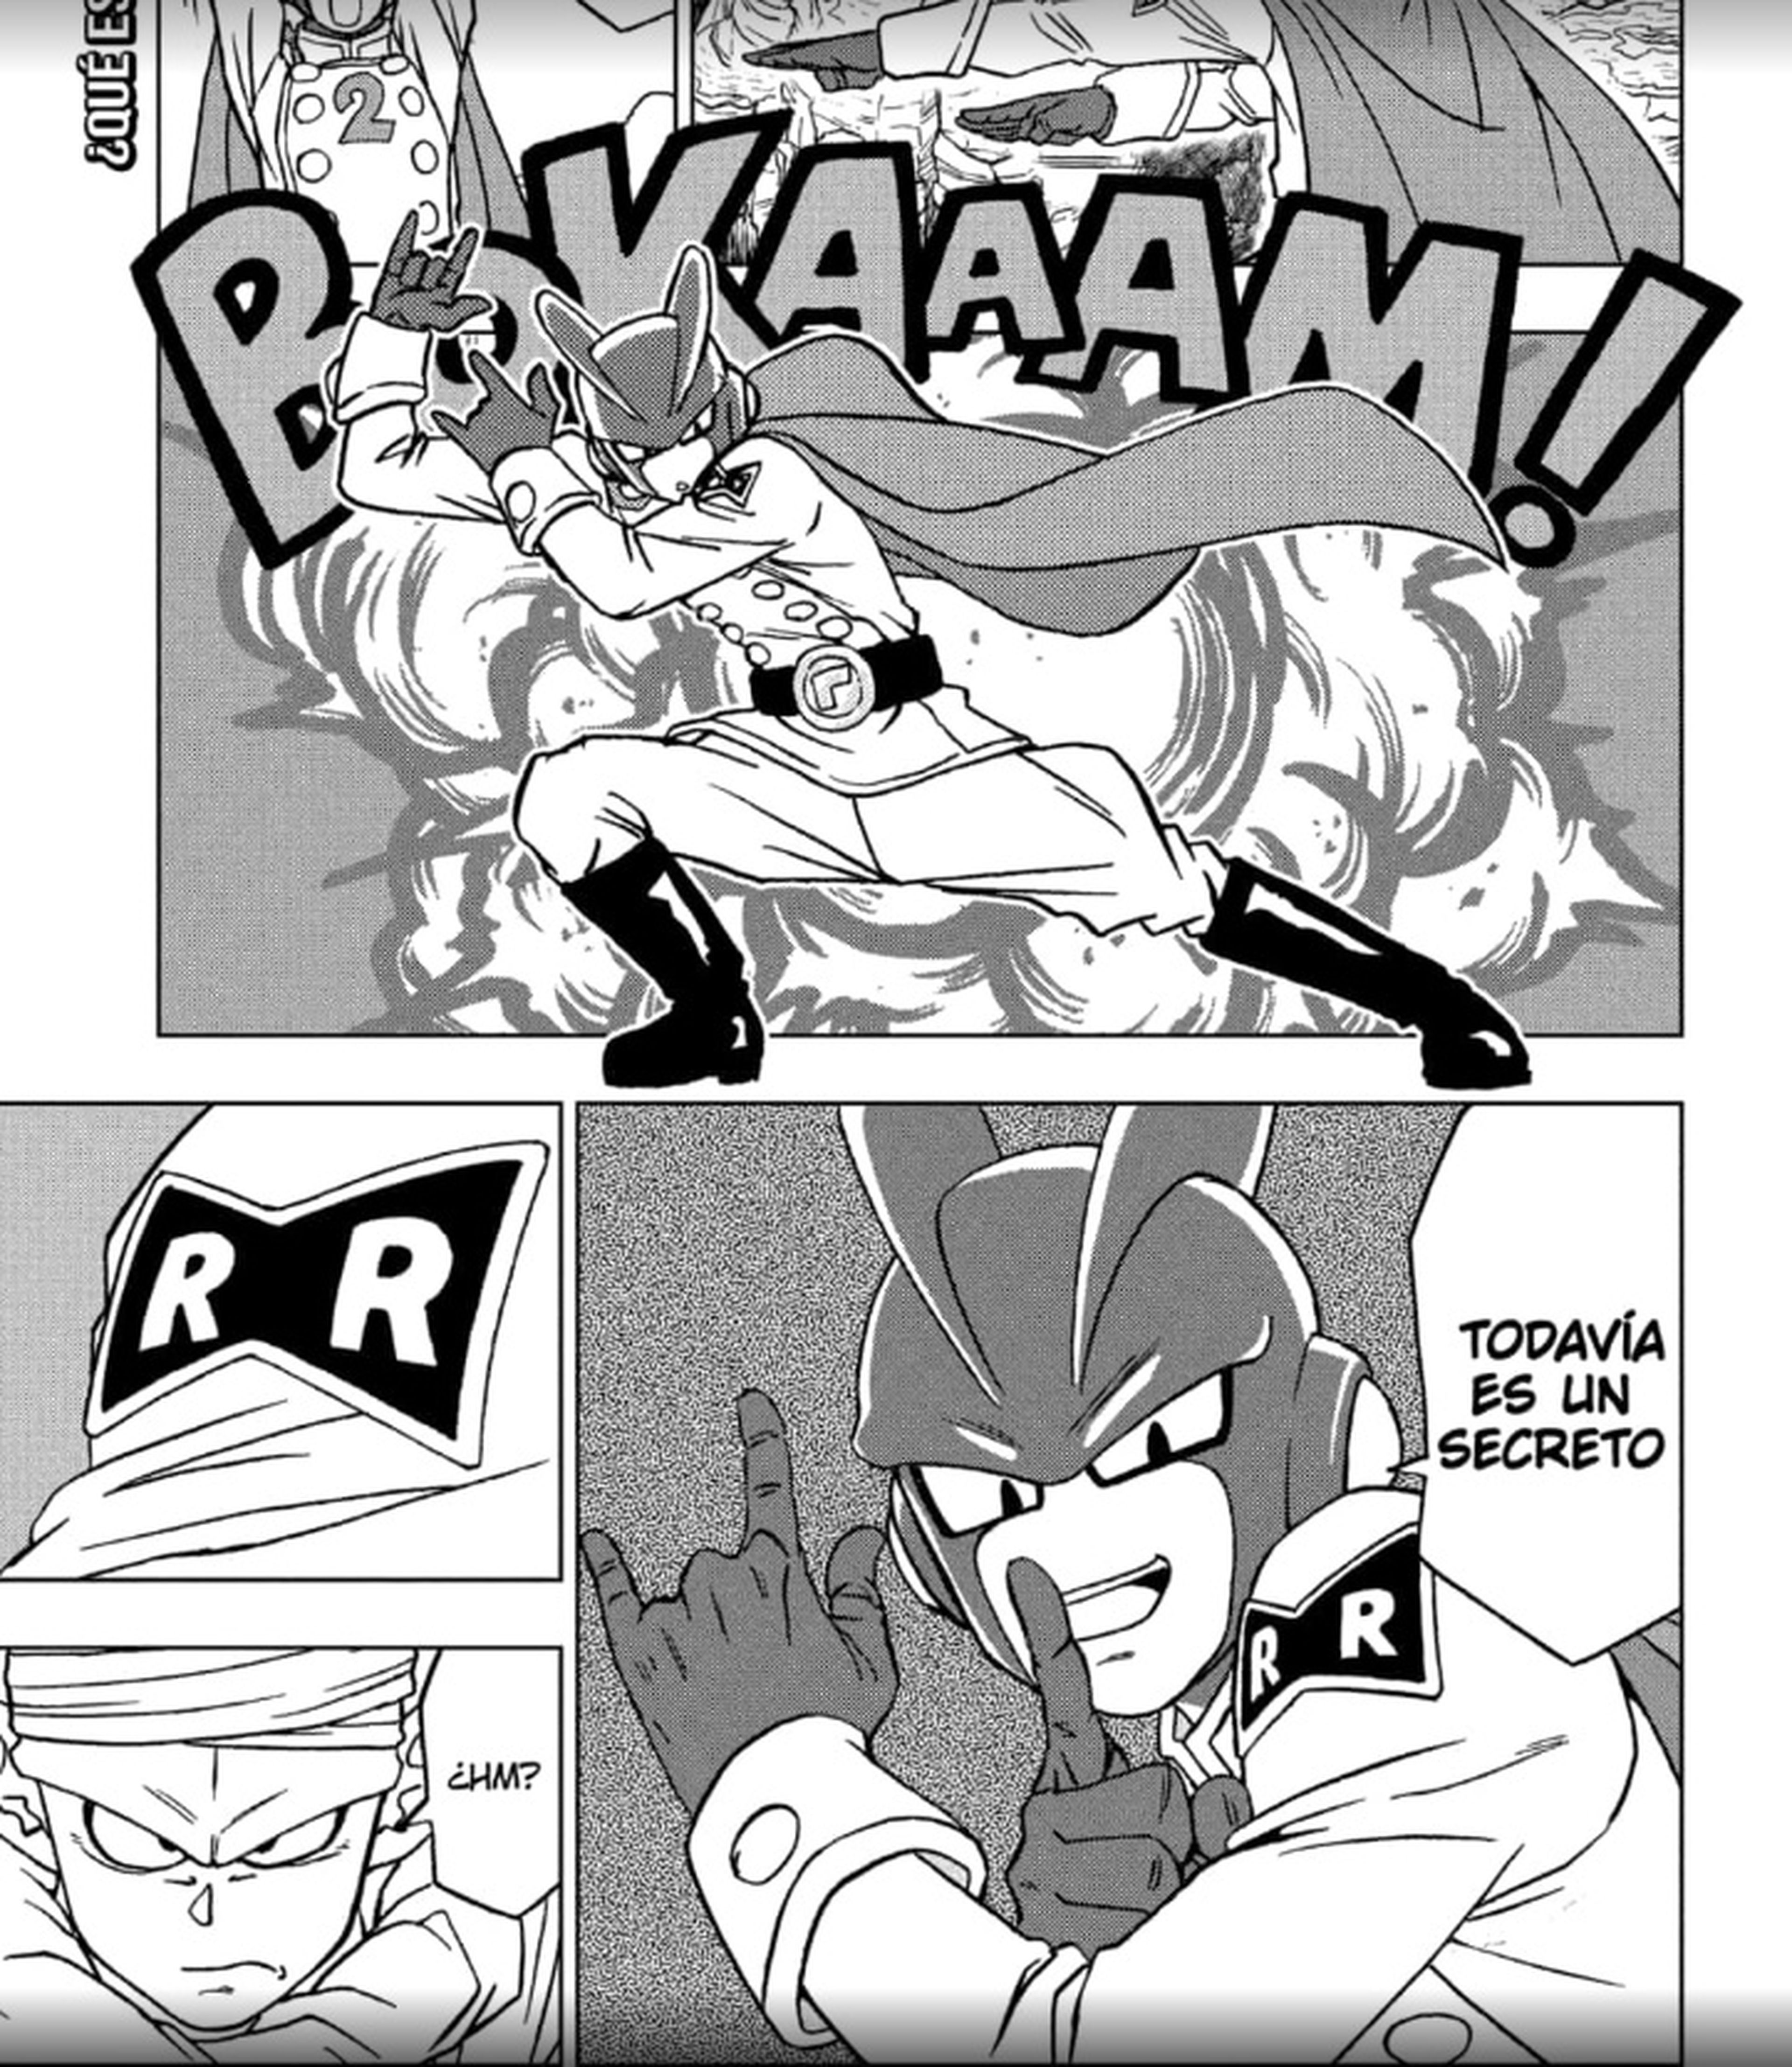 Ver Dragon Ball Super Manga 91 Español Completo Online